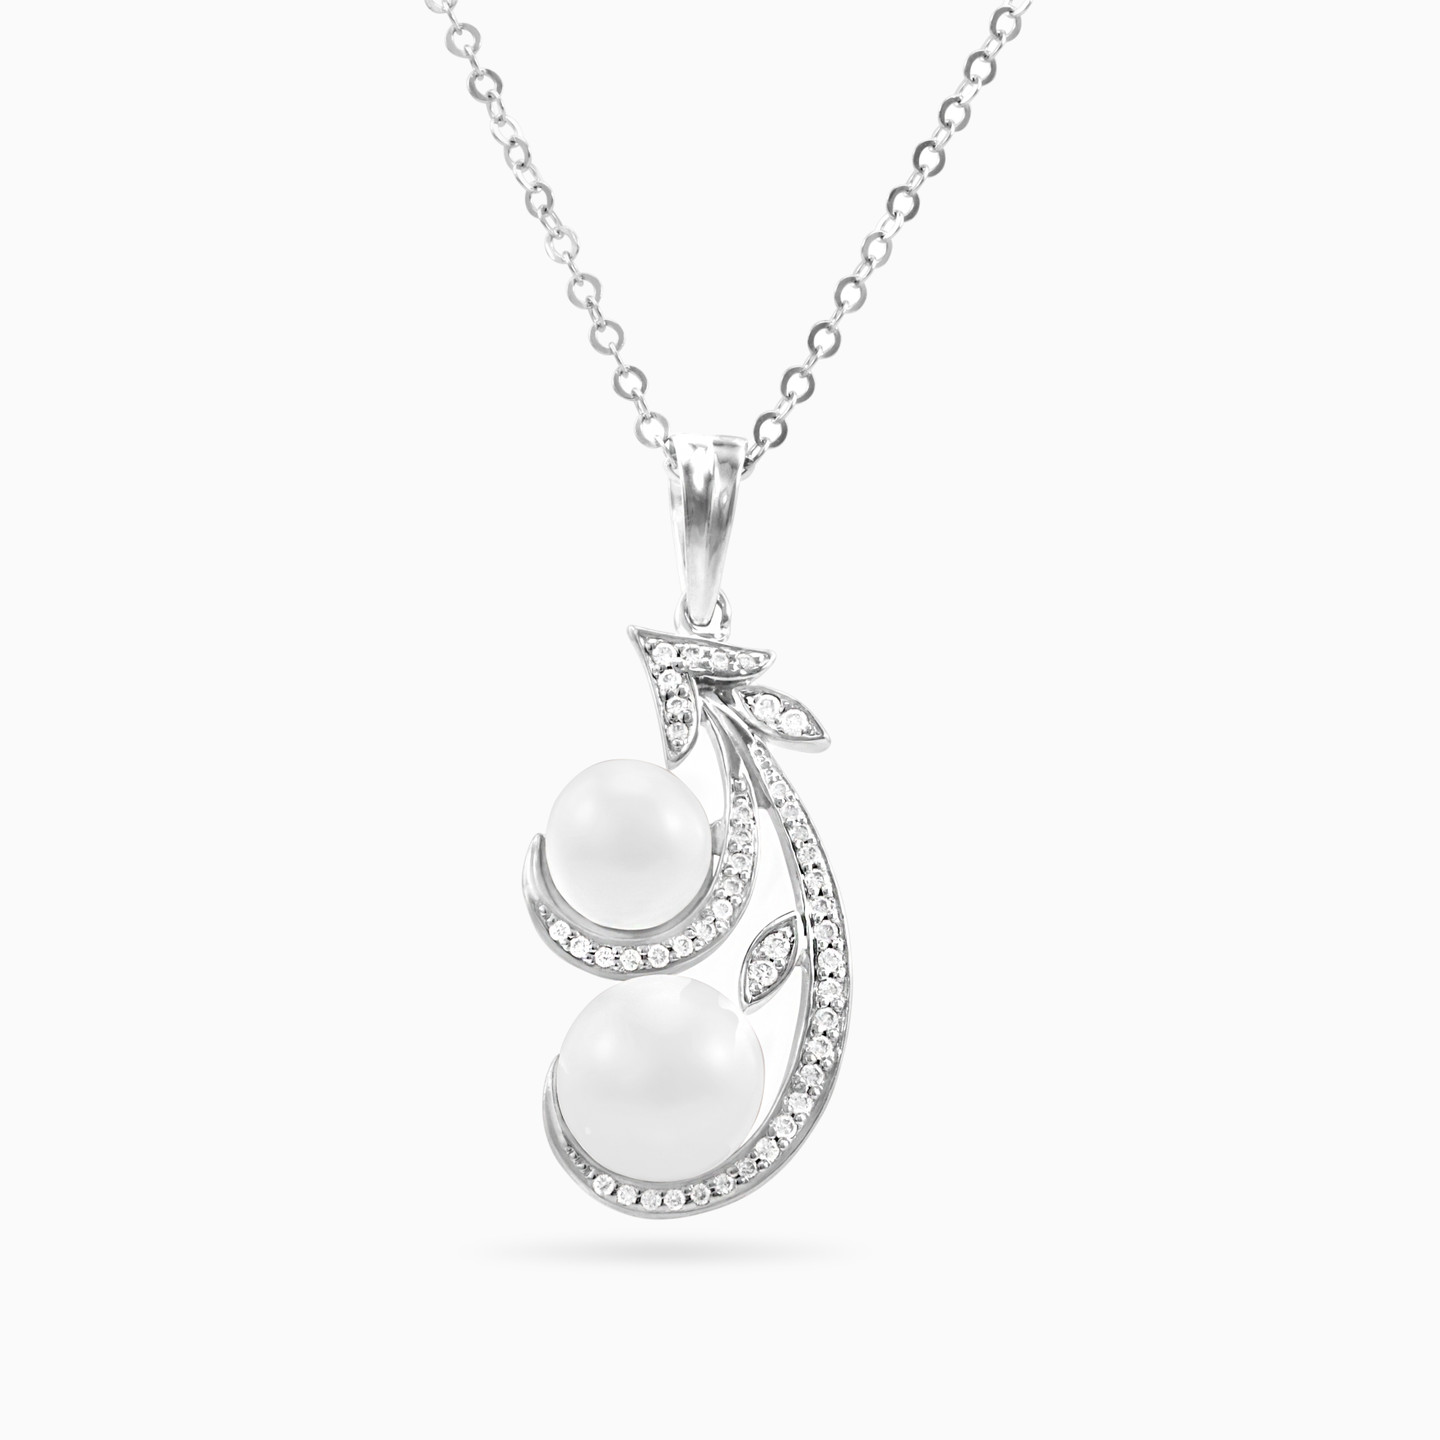 18K Gold Diamond & Pearl Pendant Necklace